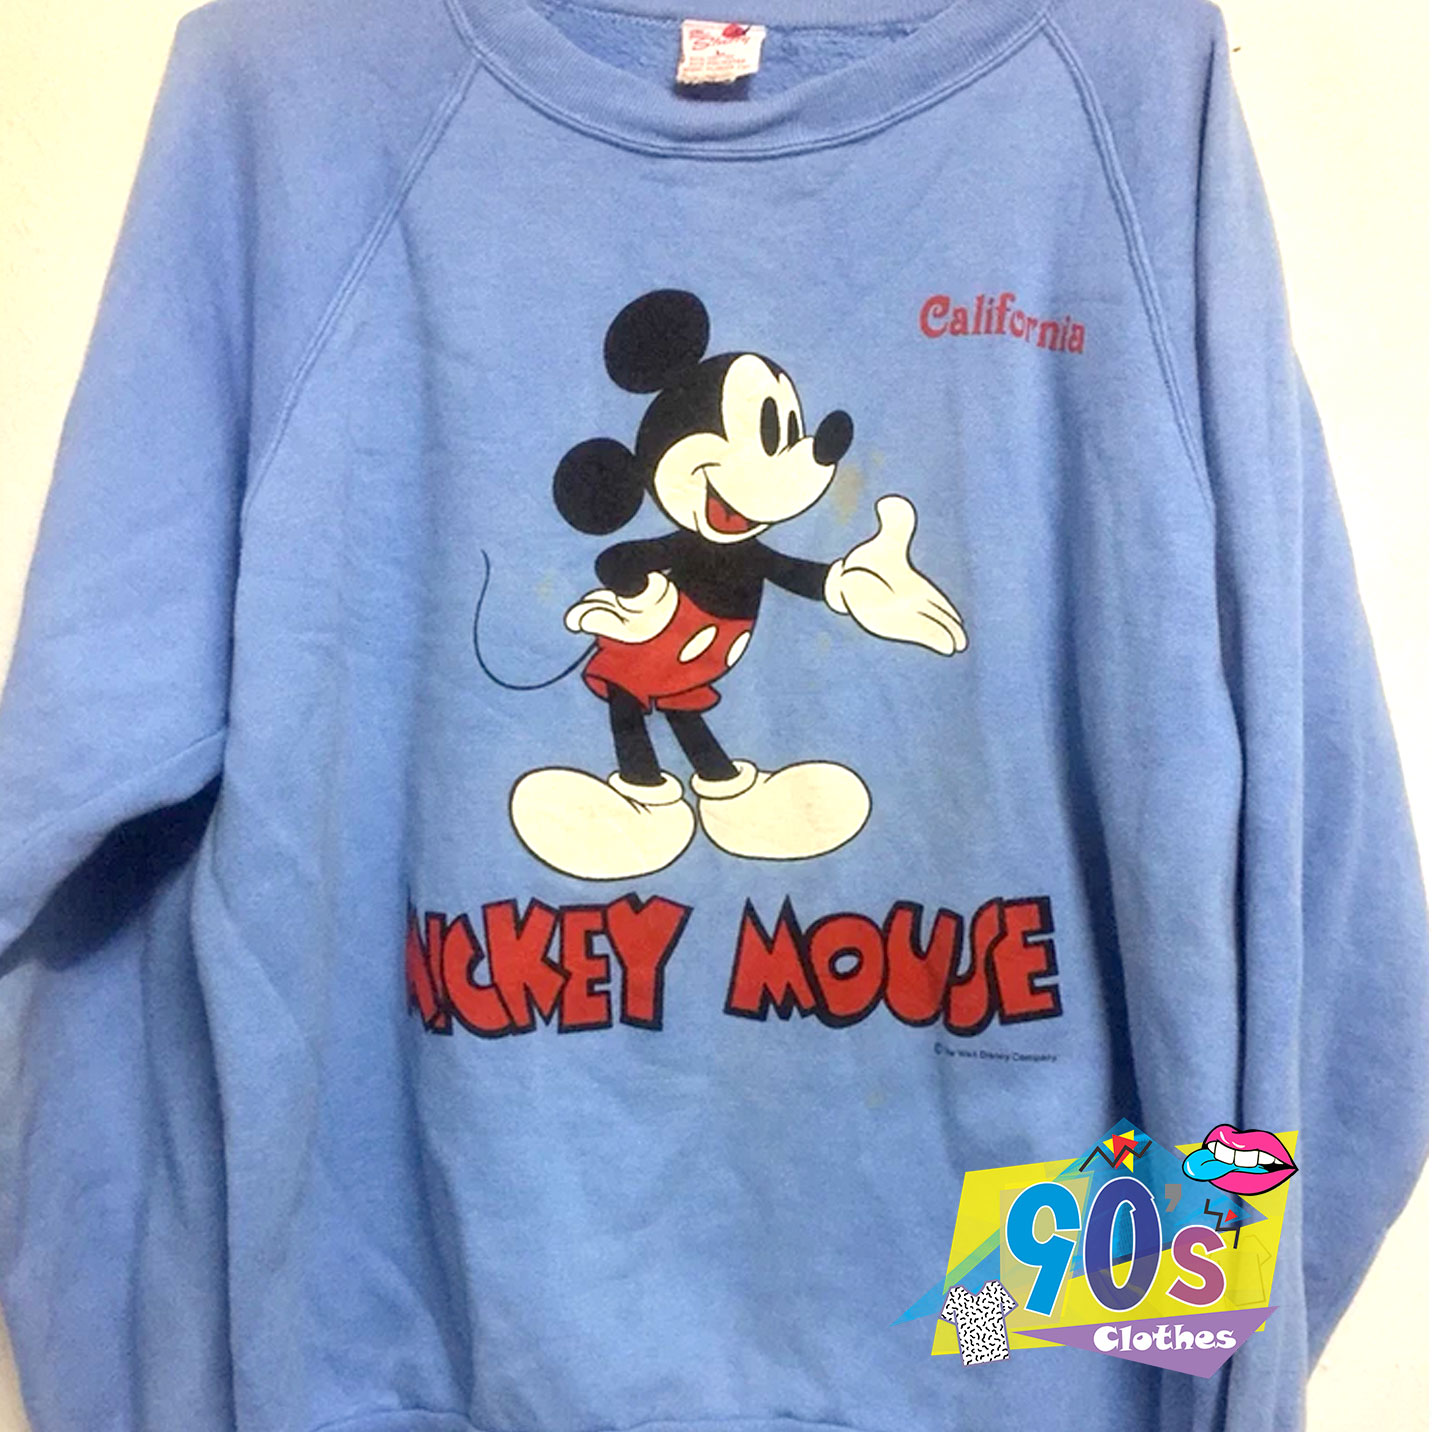 Vintage Mickey Mouse California Sweatshirt - 90sclothes.com